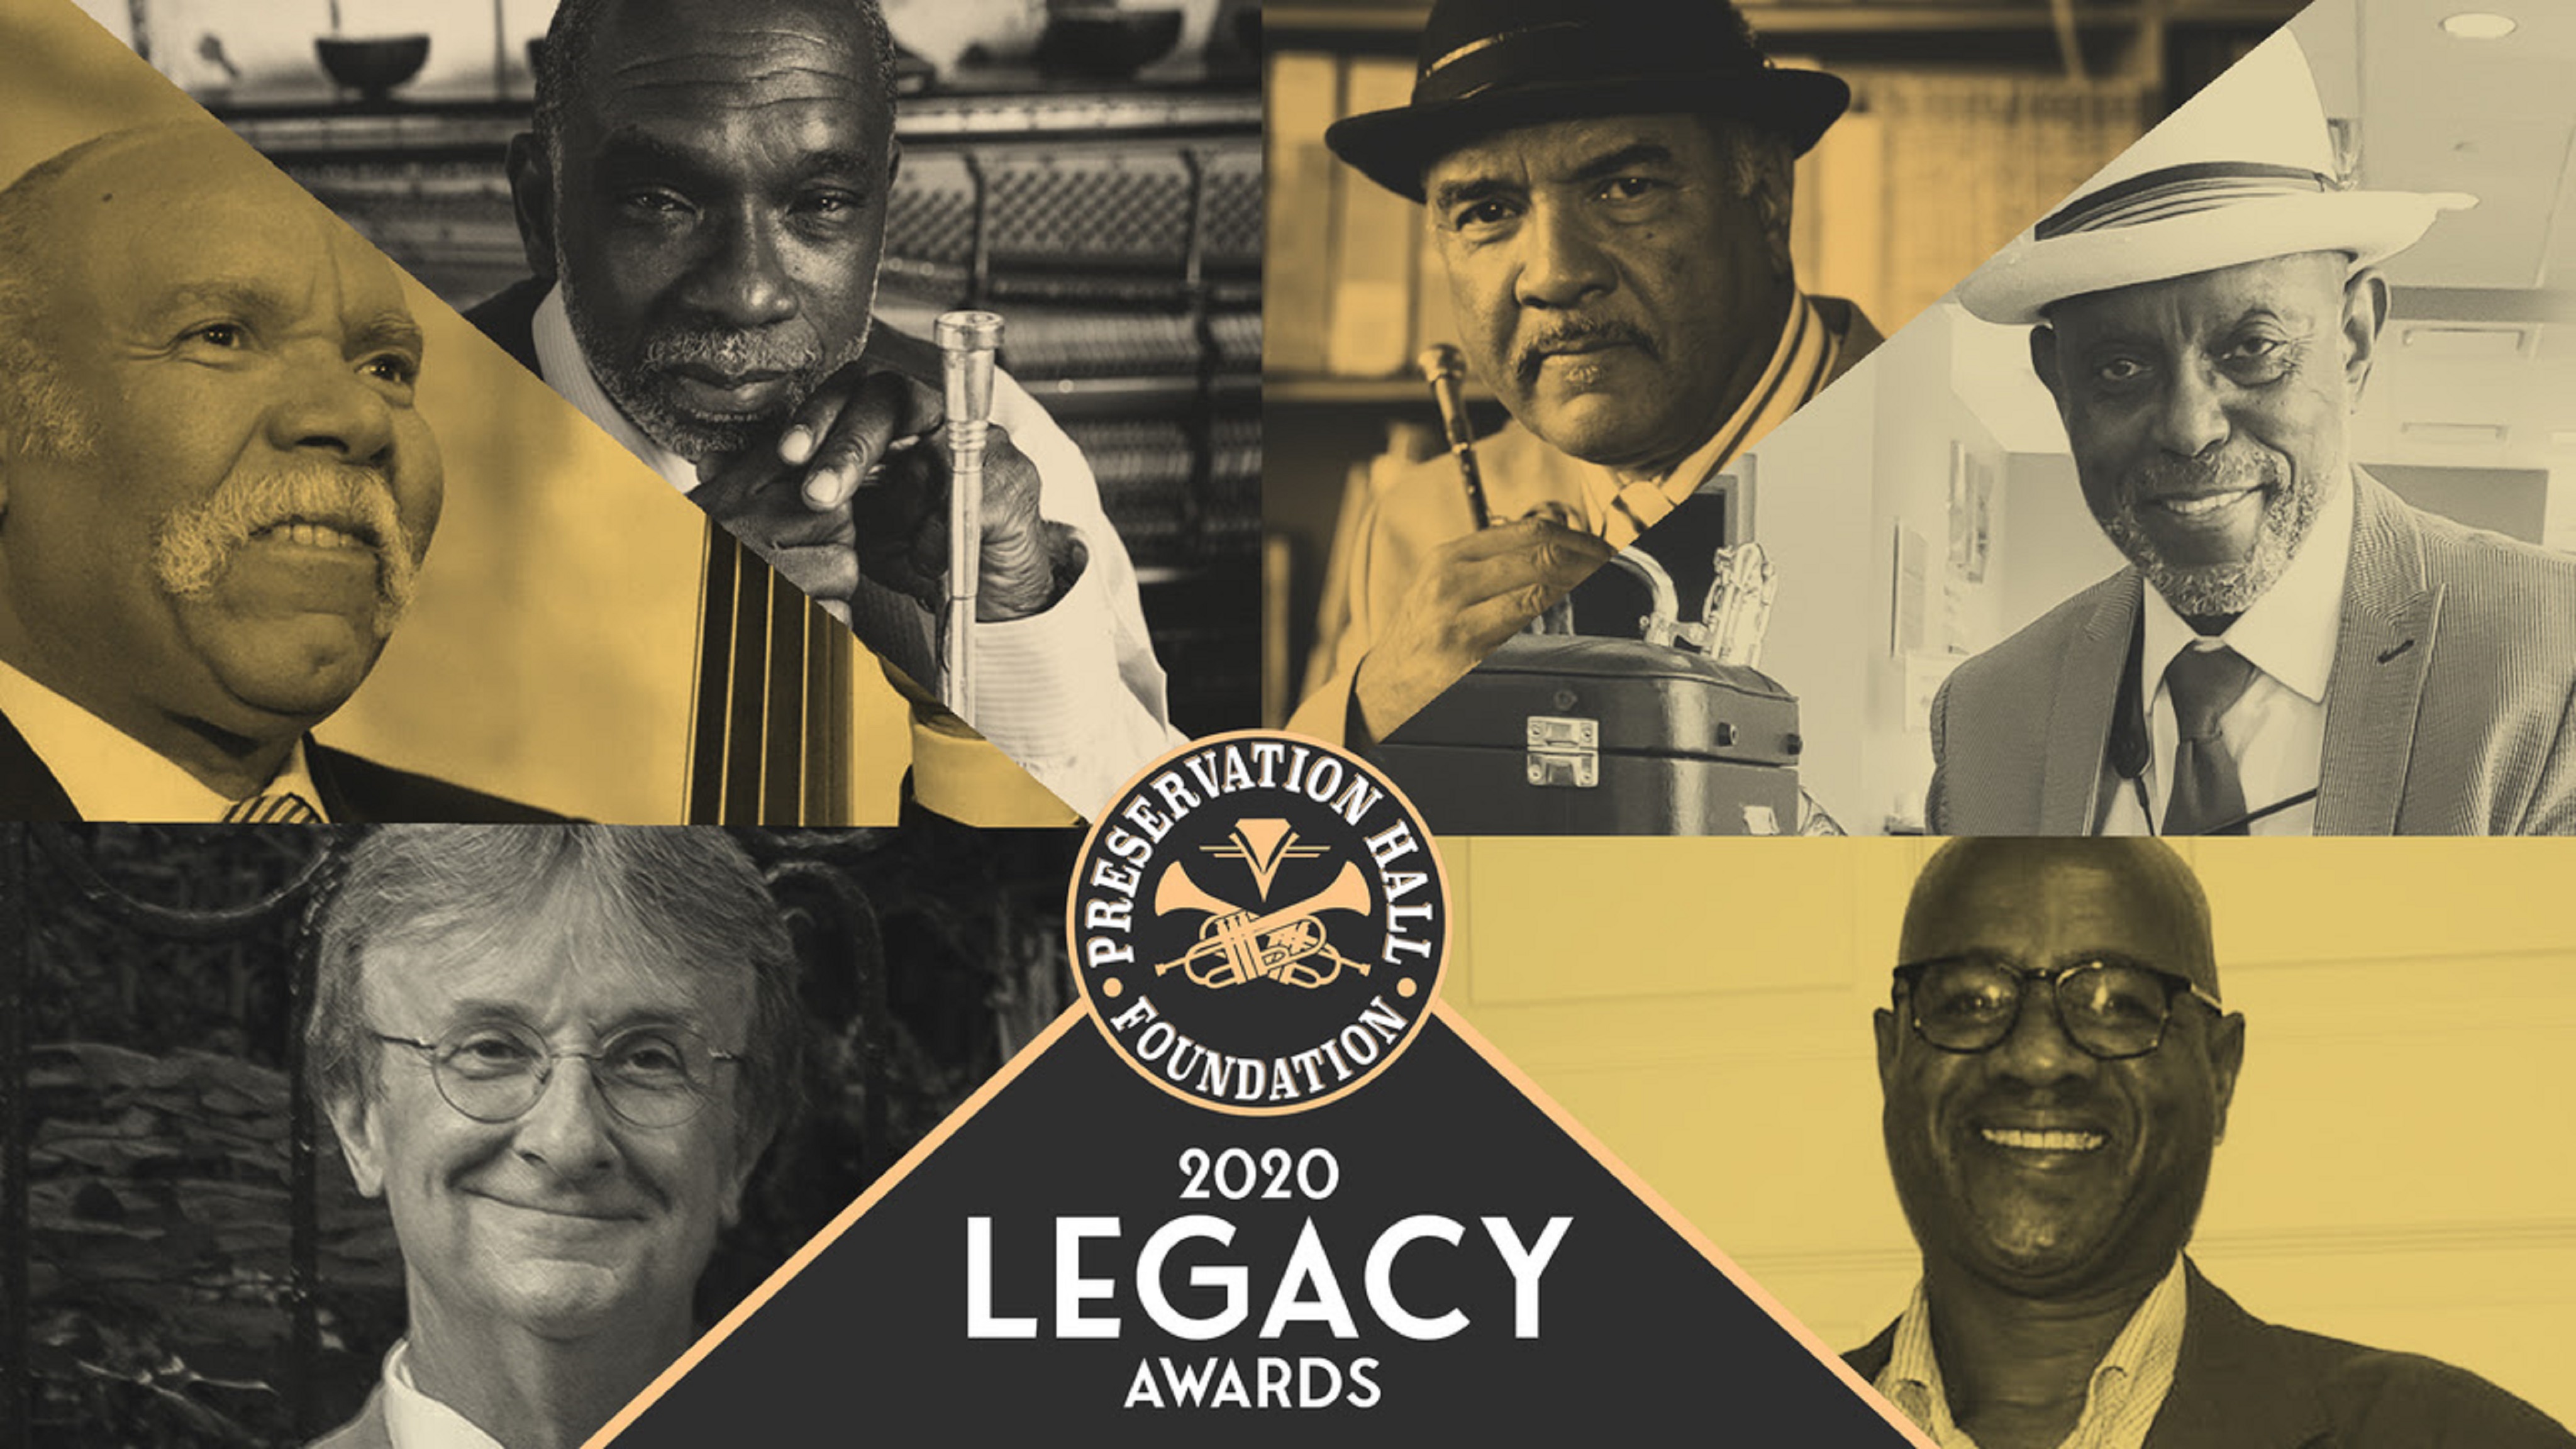 Preservation Hall Foundation Legacy Awards on YouTube